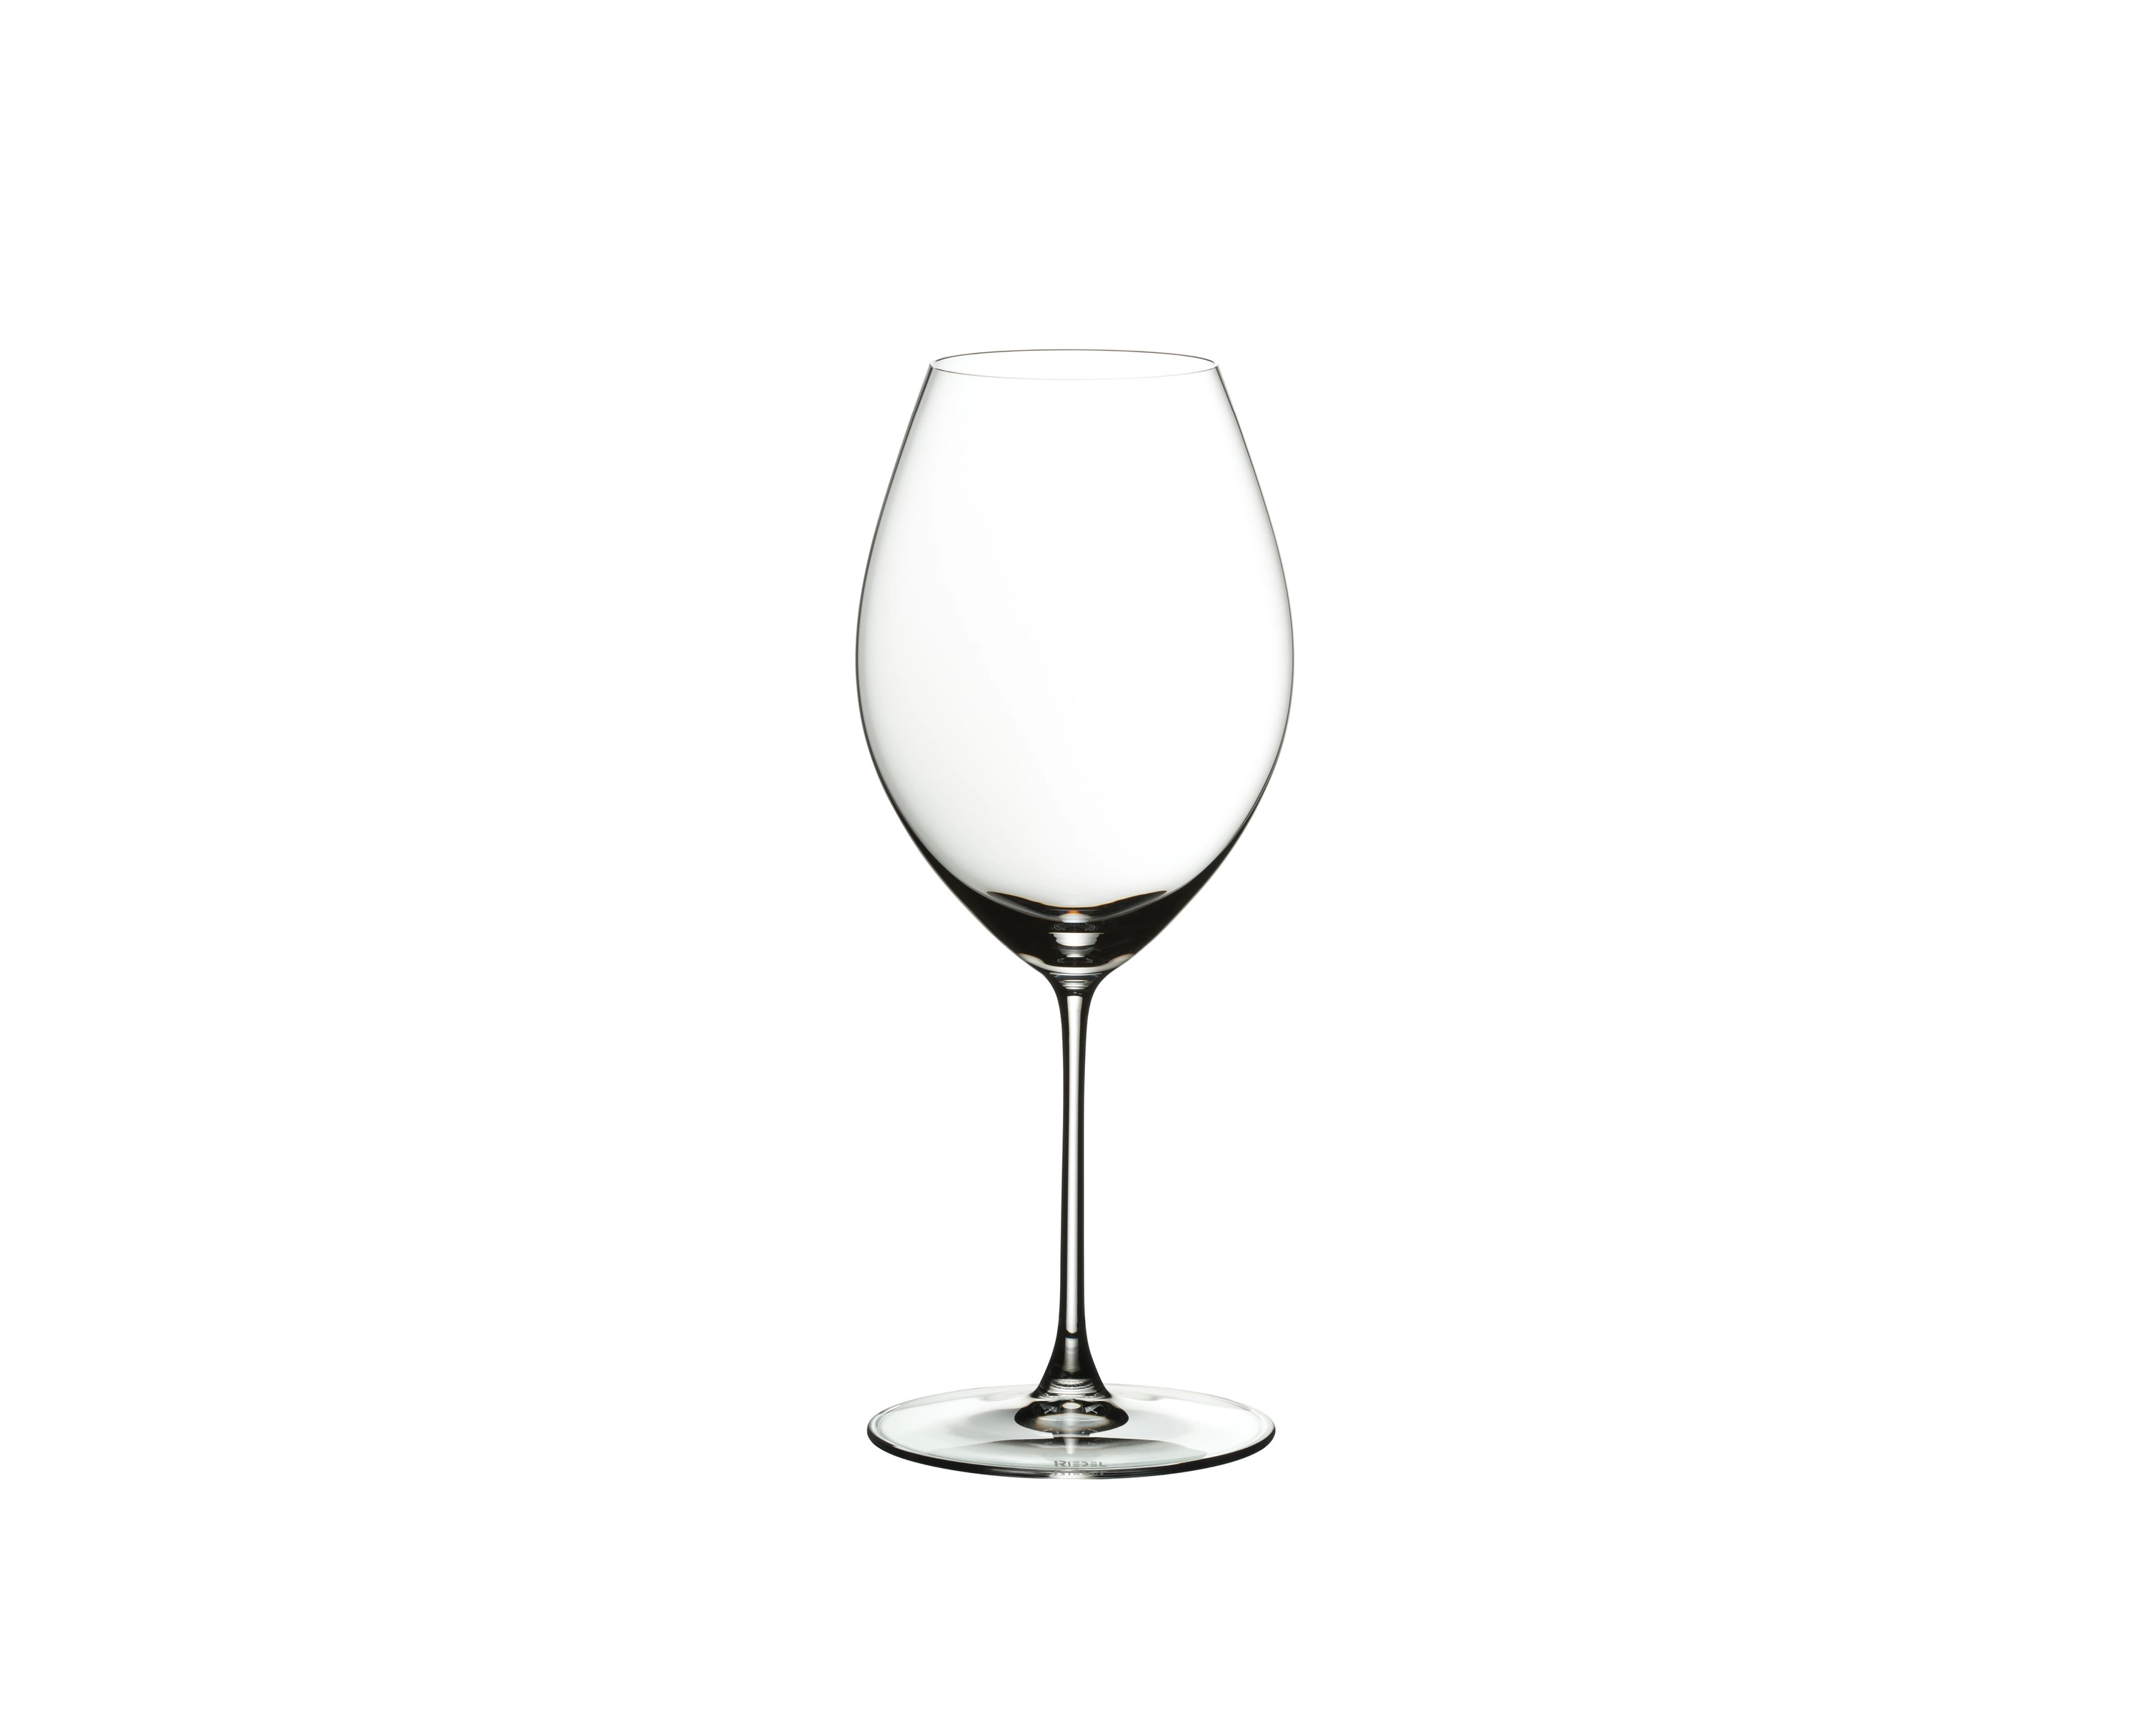 Riedel Veritas Old World Syrah Glas Set mit 2 Gläsern, Set mit 2 Gläsern